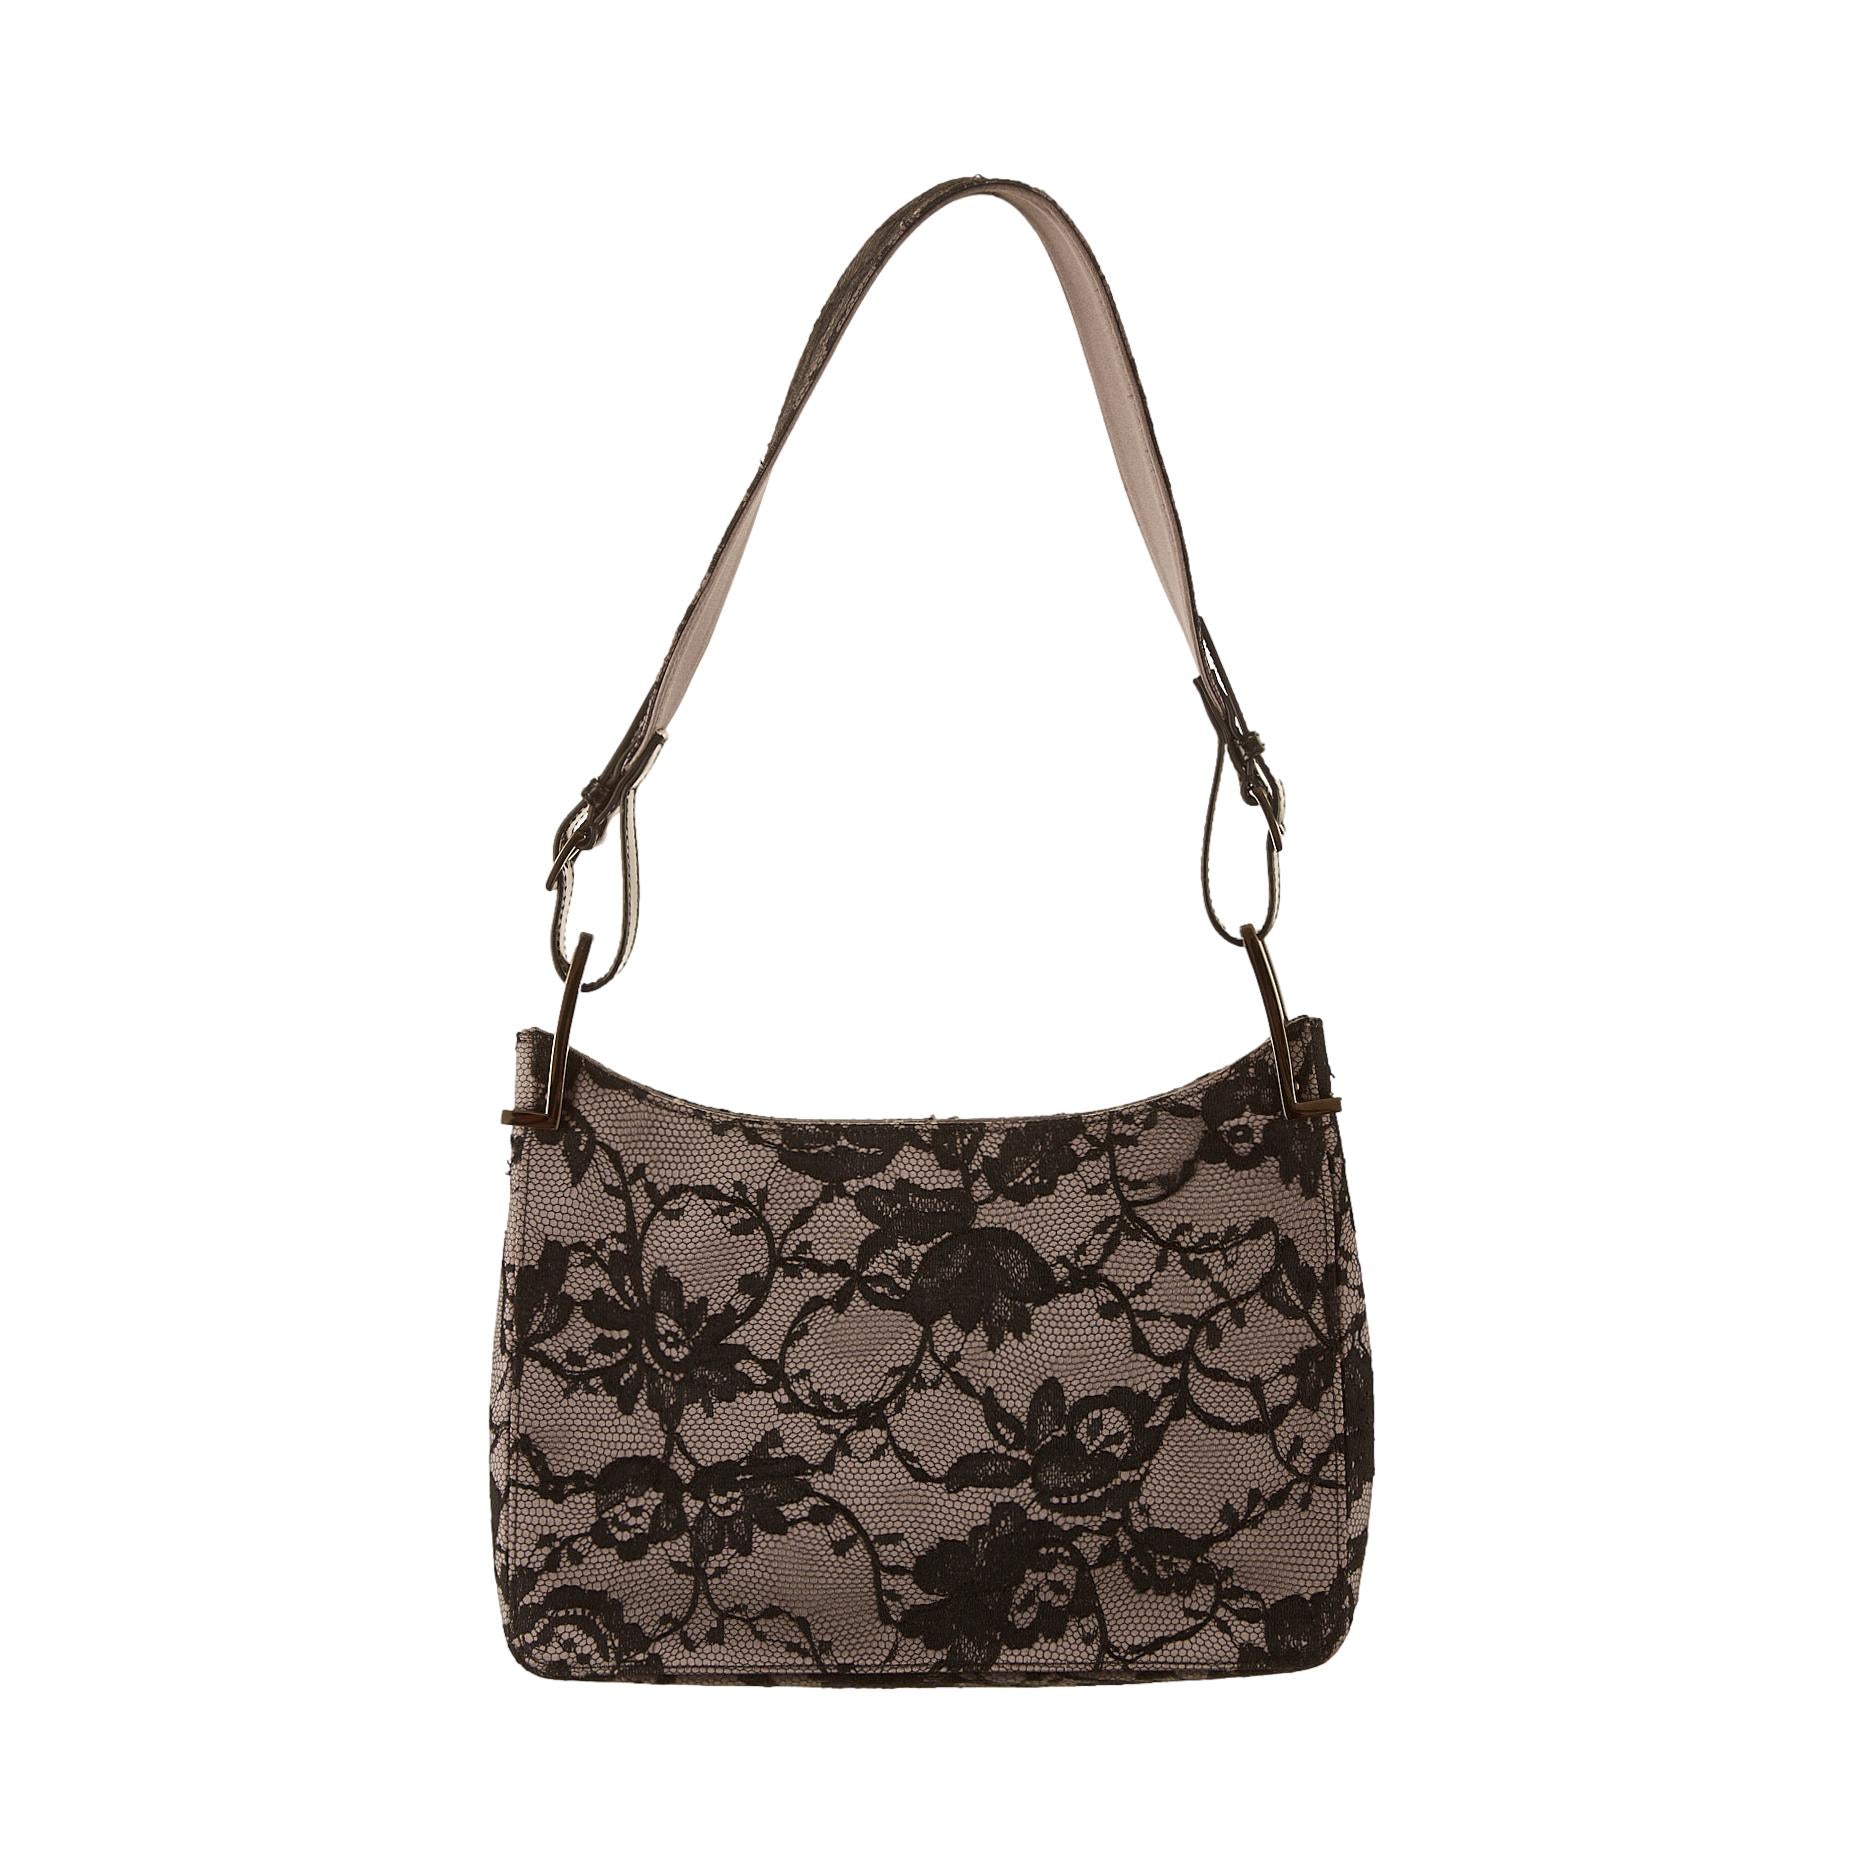 Gucci Grey Floral Lace Shoulder Bag